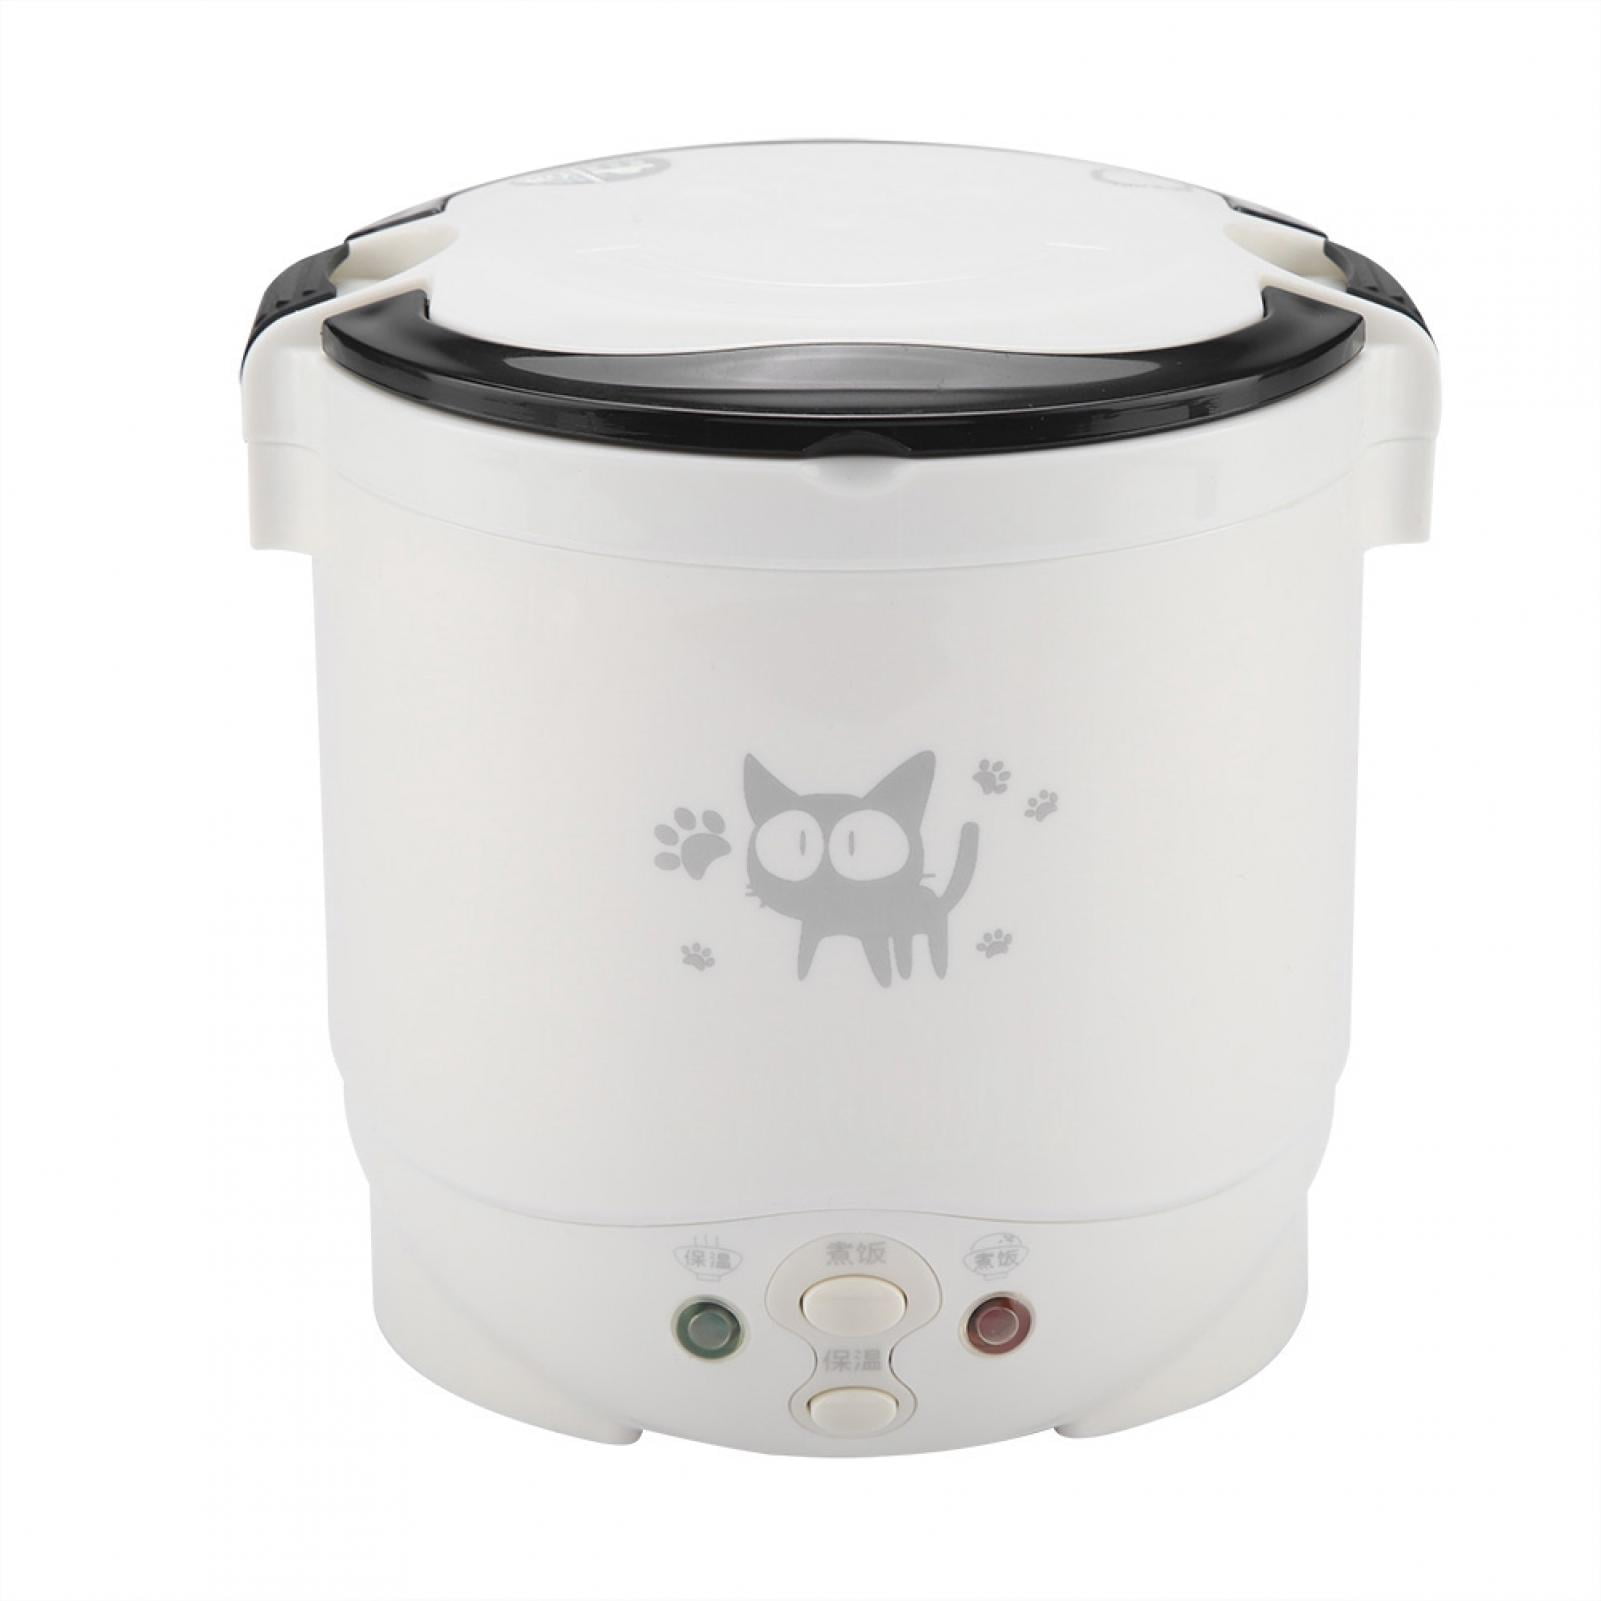 Qiilu 12V 100W 1L Electric Portable Multifunctional Rice Cooker Food  Steamer,Multifunctional Rice Cooker 